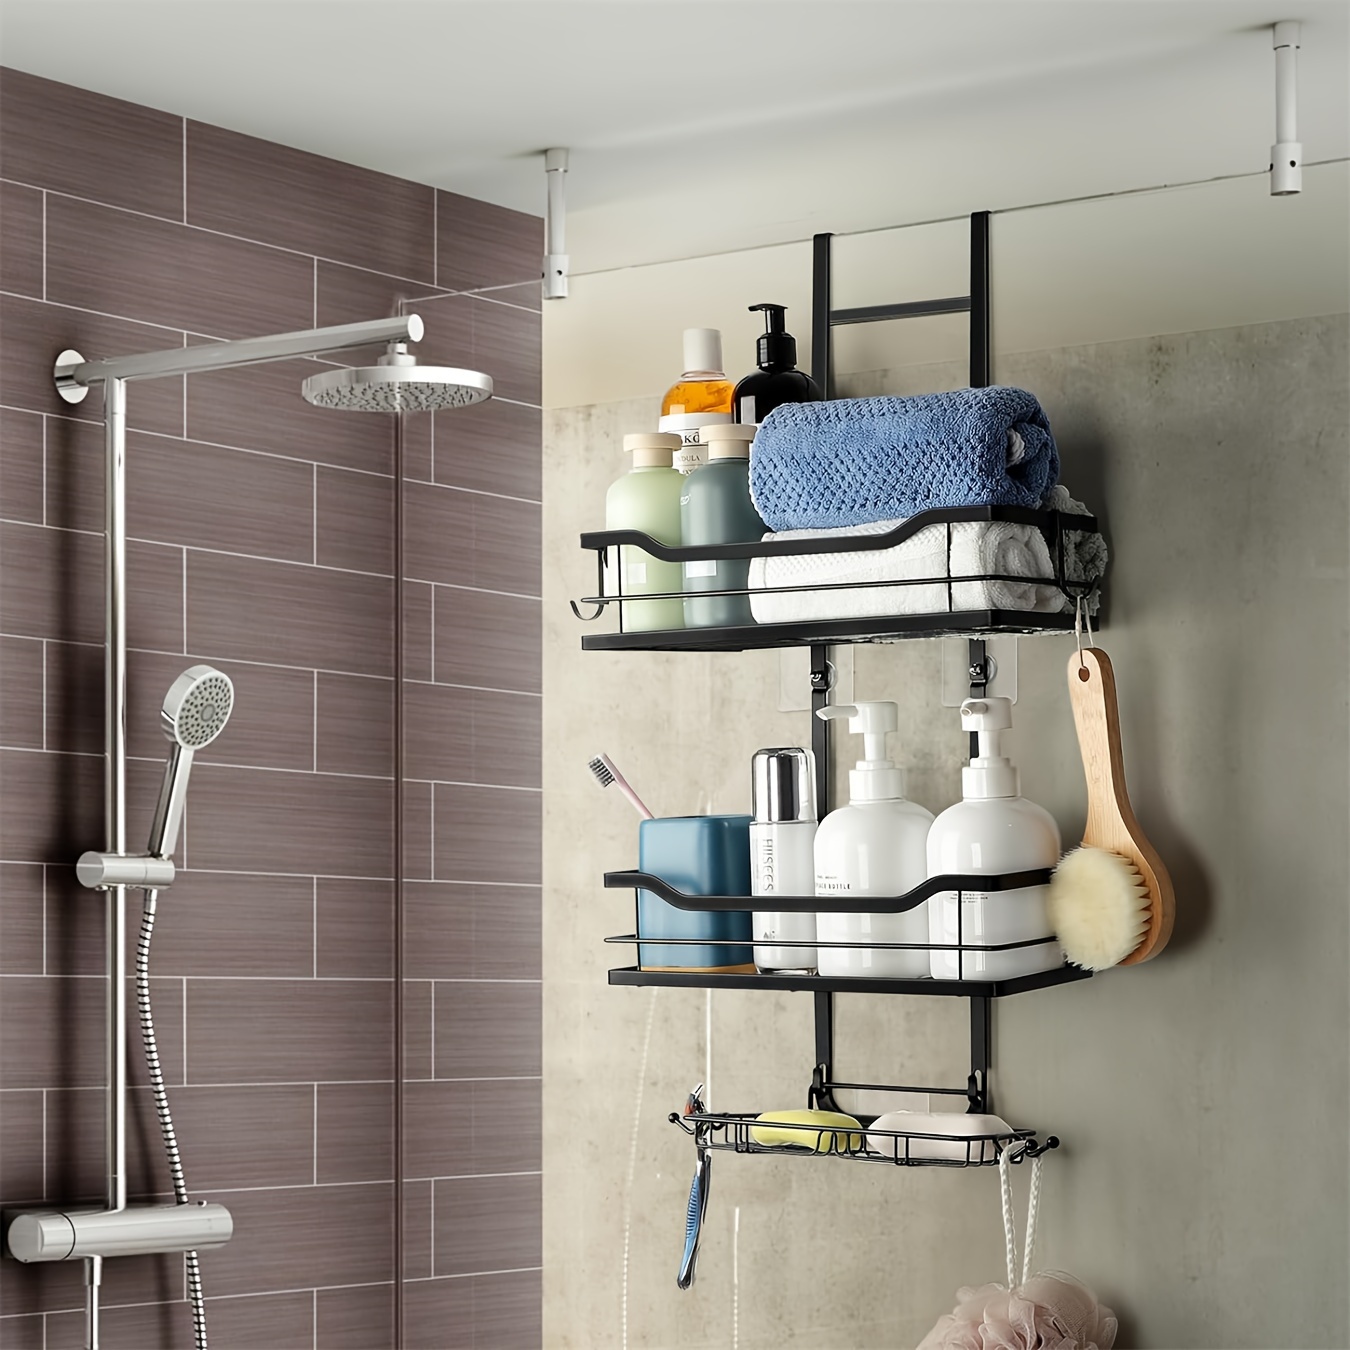 

Shower Shelf For Hanging With Soap Dish, Shower Shelf, No Drilling, Bathroom Shelf With 2 Baskets, Bathroom Shelf, Shower Basket For Hanging Over The Shower Door For Bathroom, Black